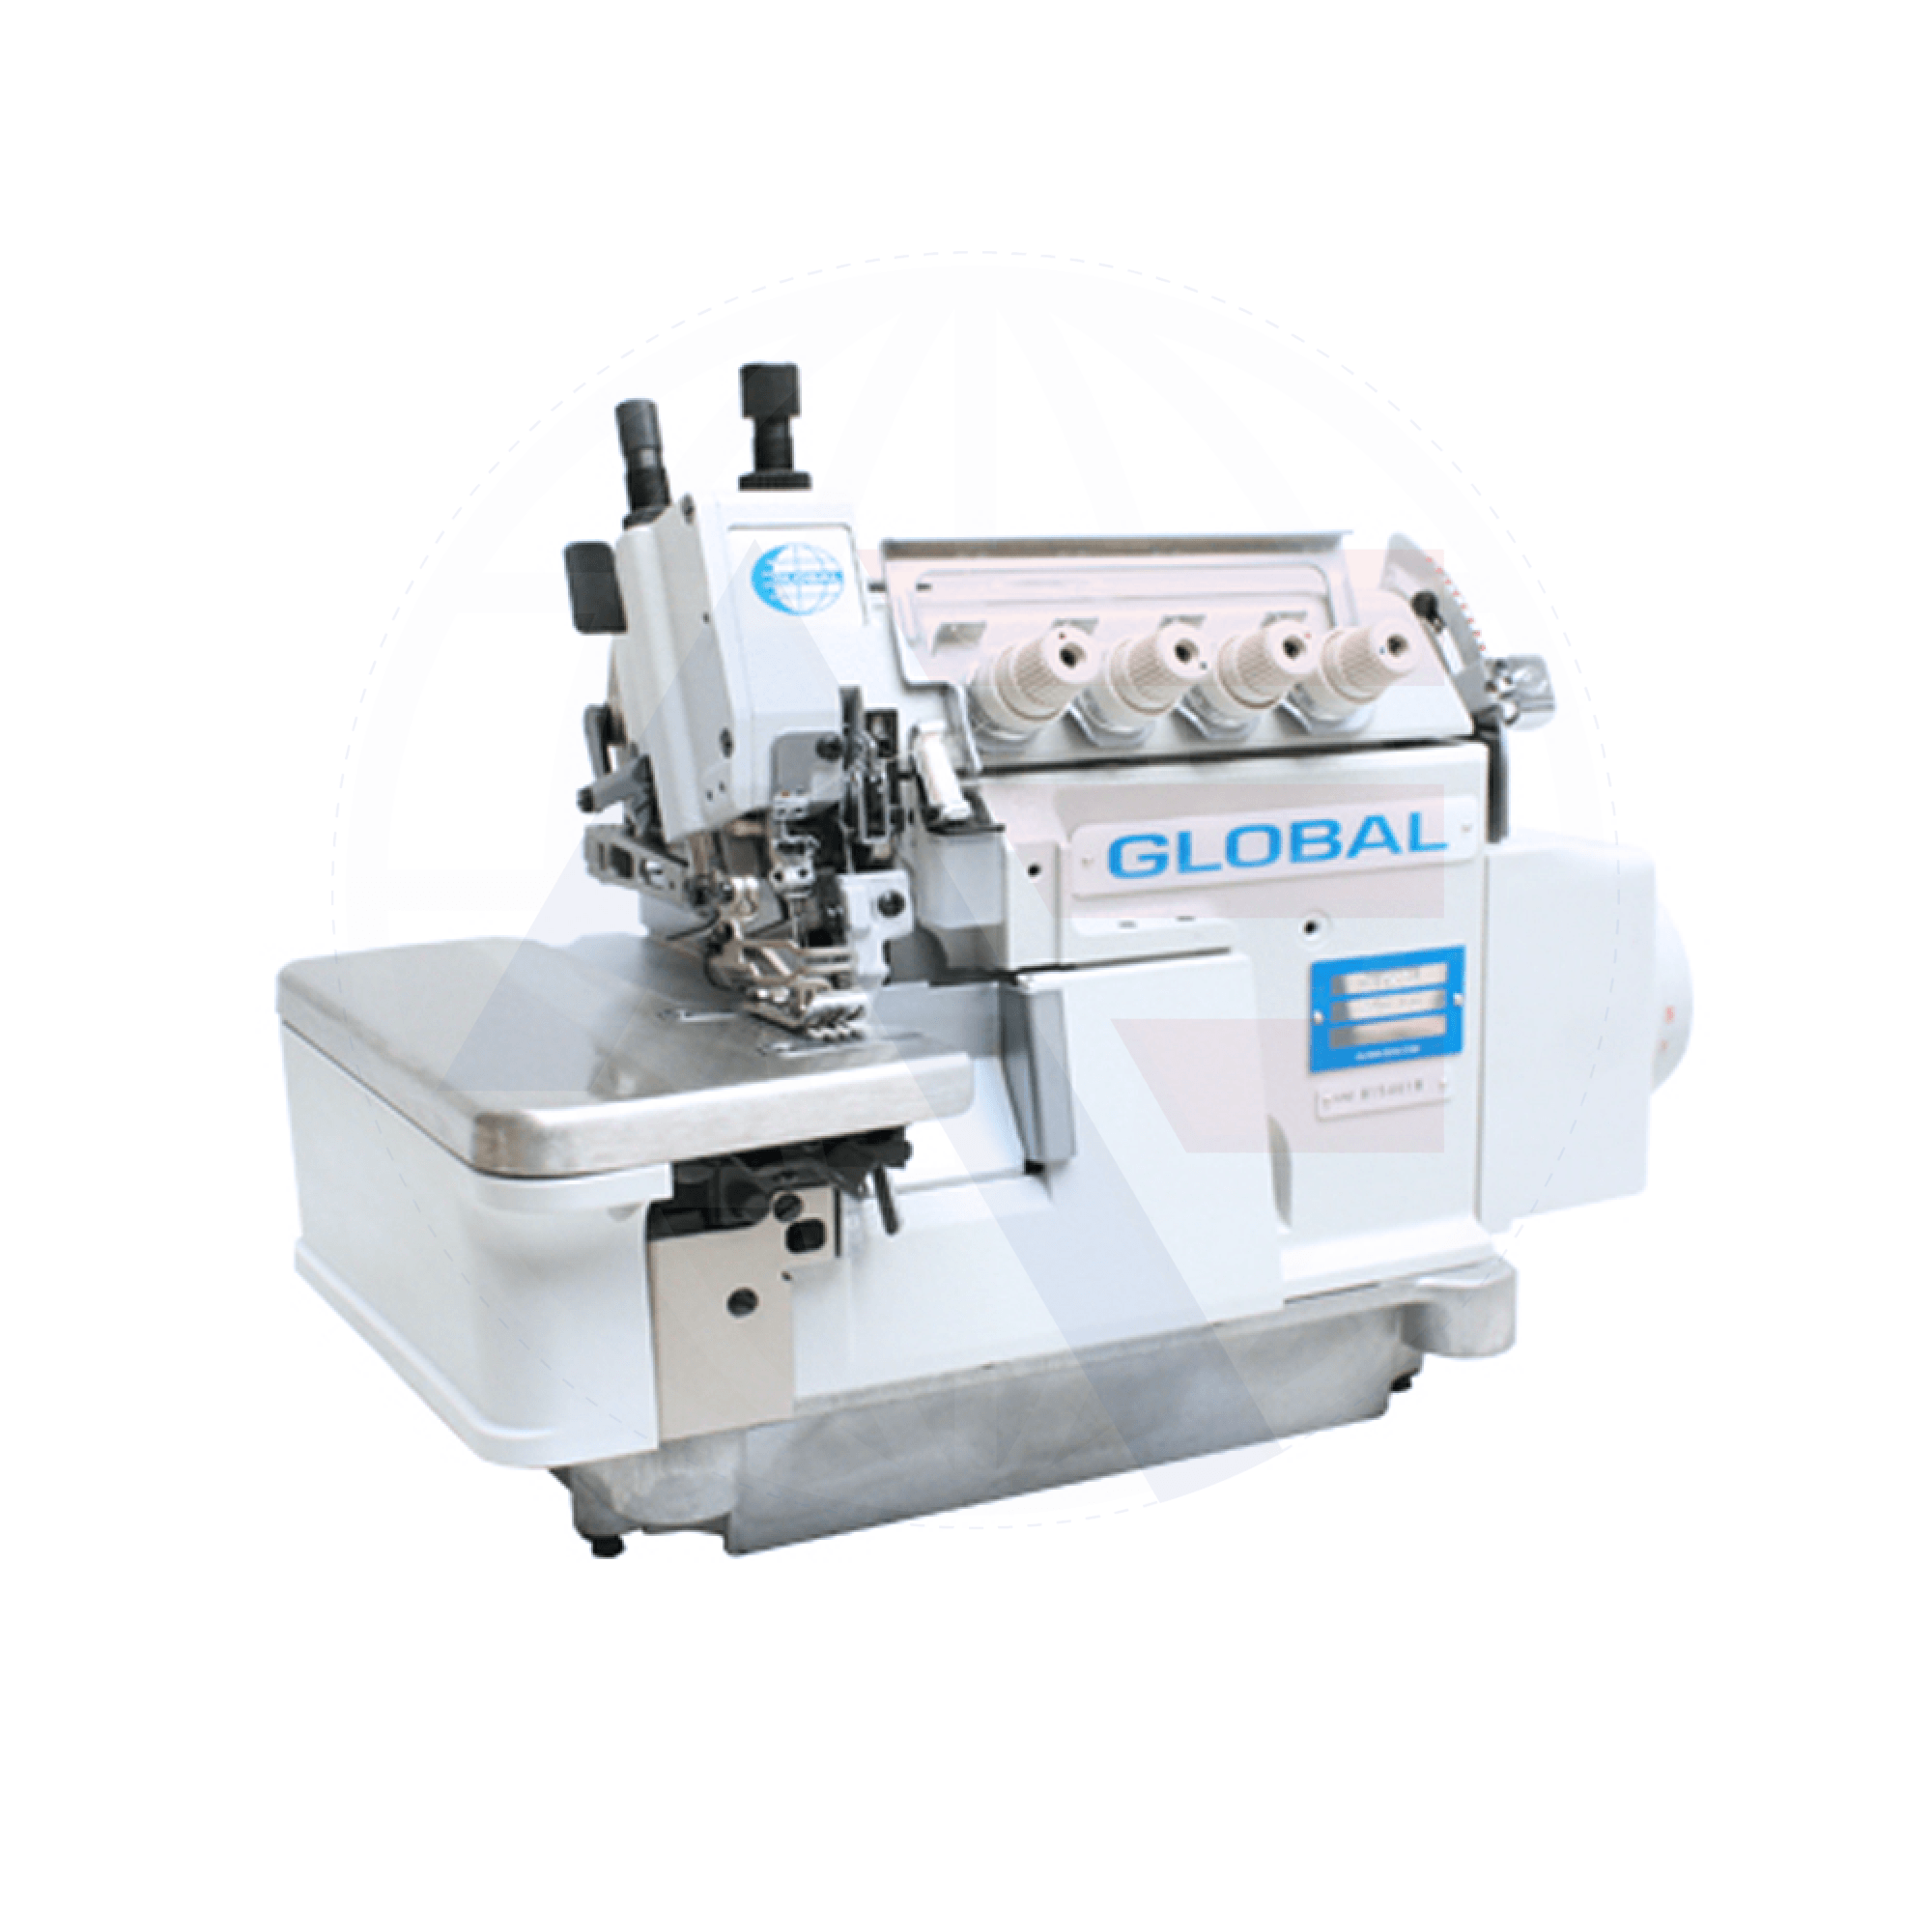 Global Ovt 530 Dd Series Overlock Machine Sewing Machines